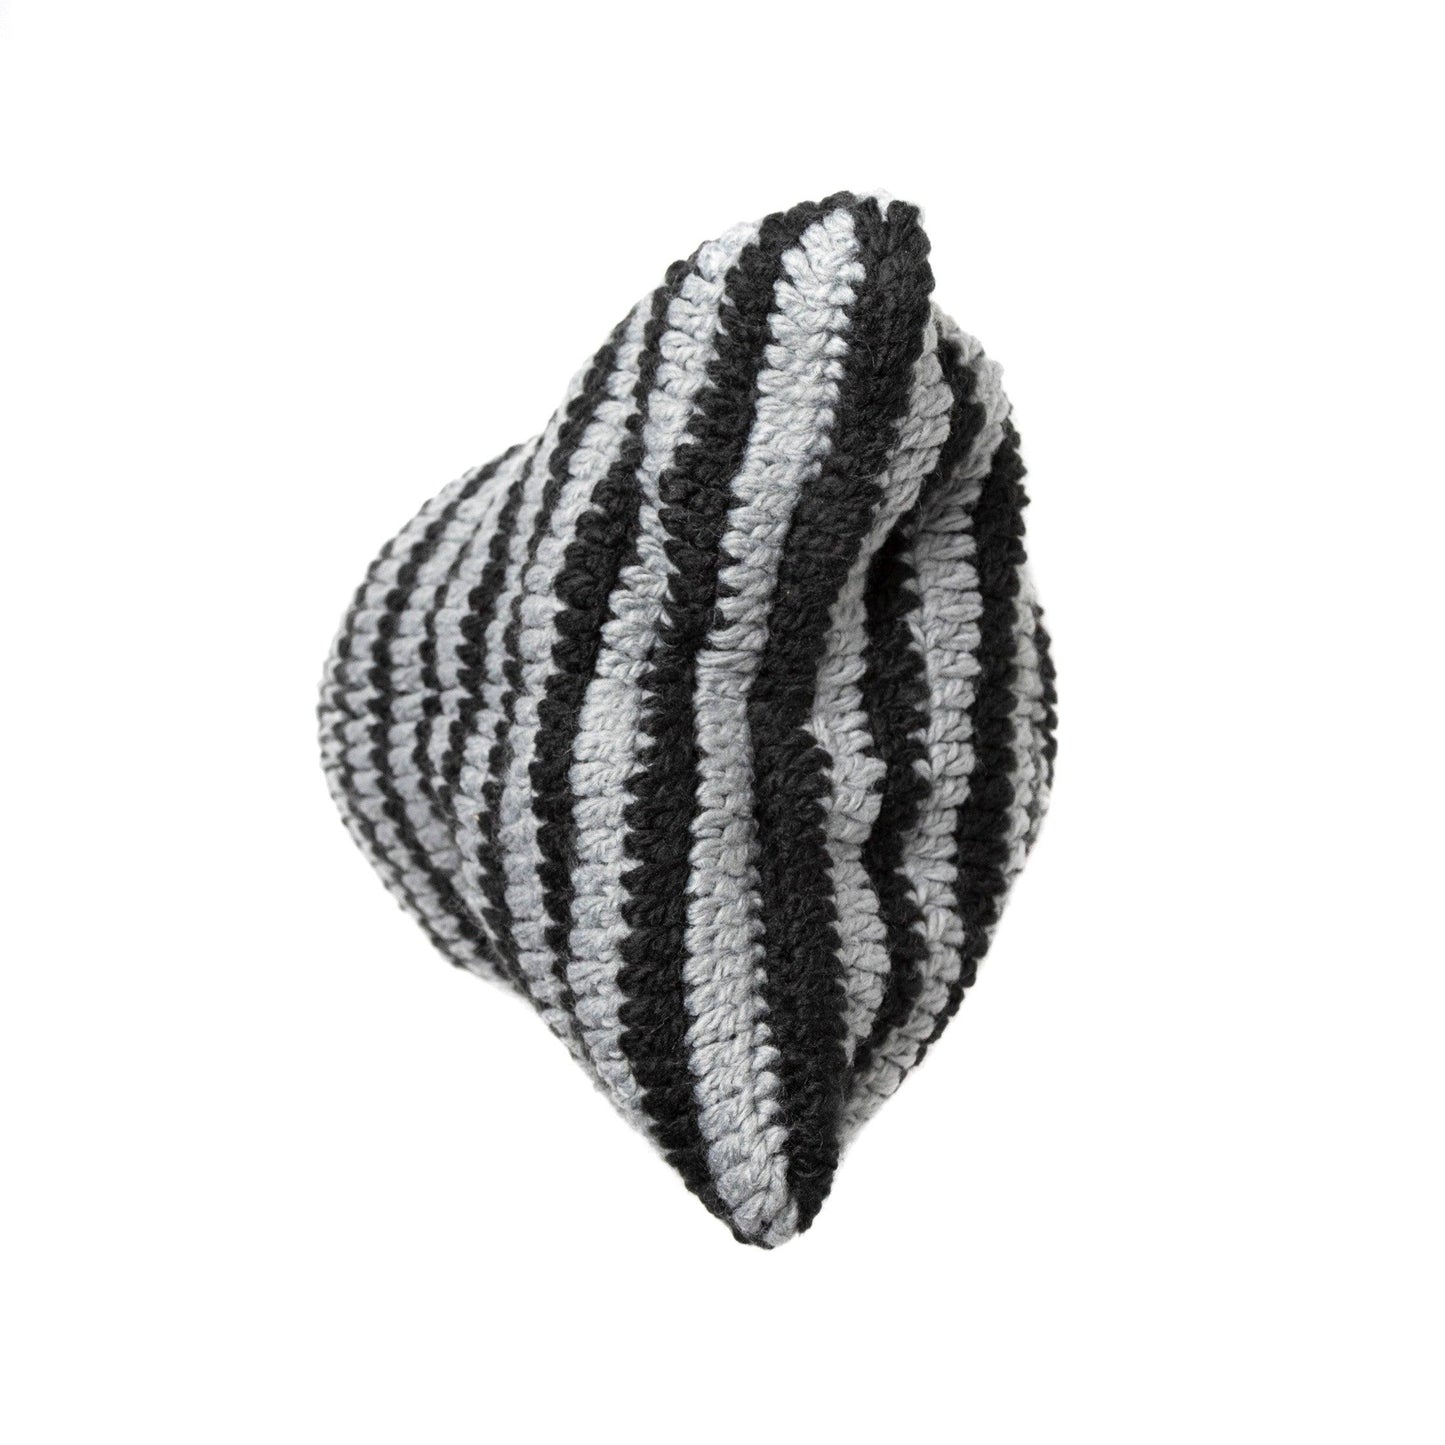 Striped Crochet Black/Grey Beanies - Known Source